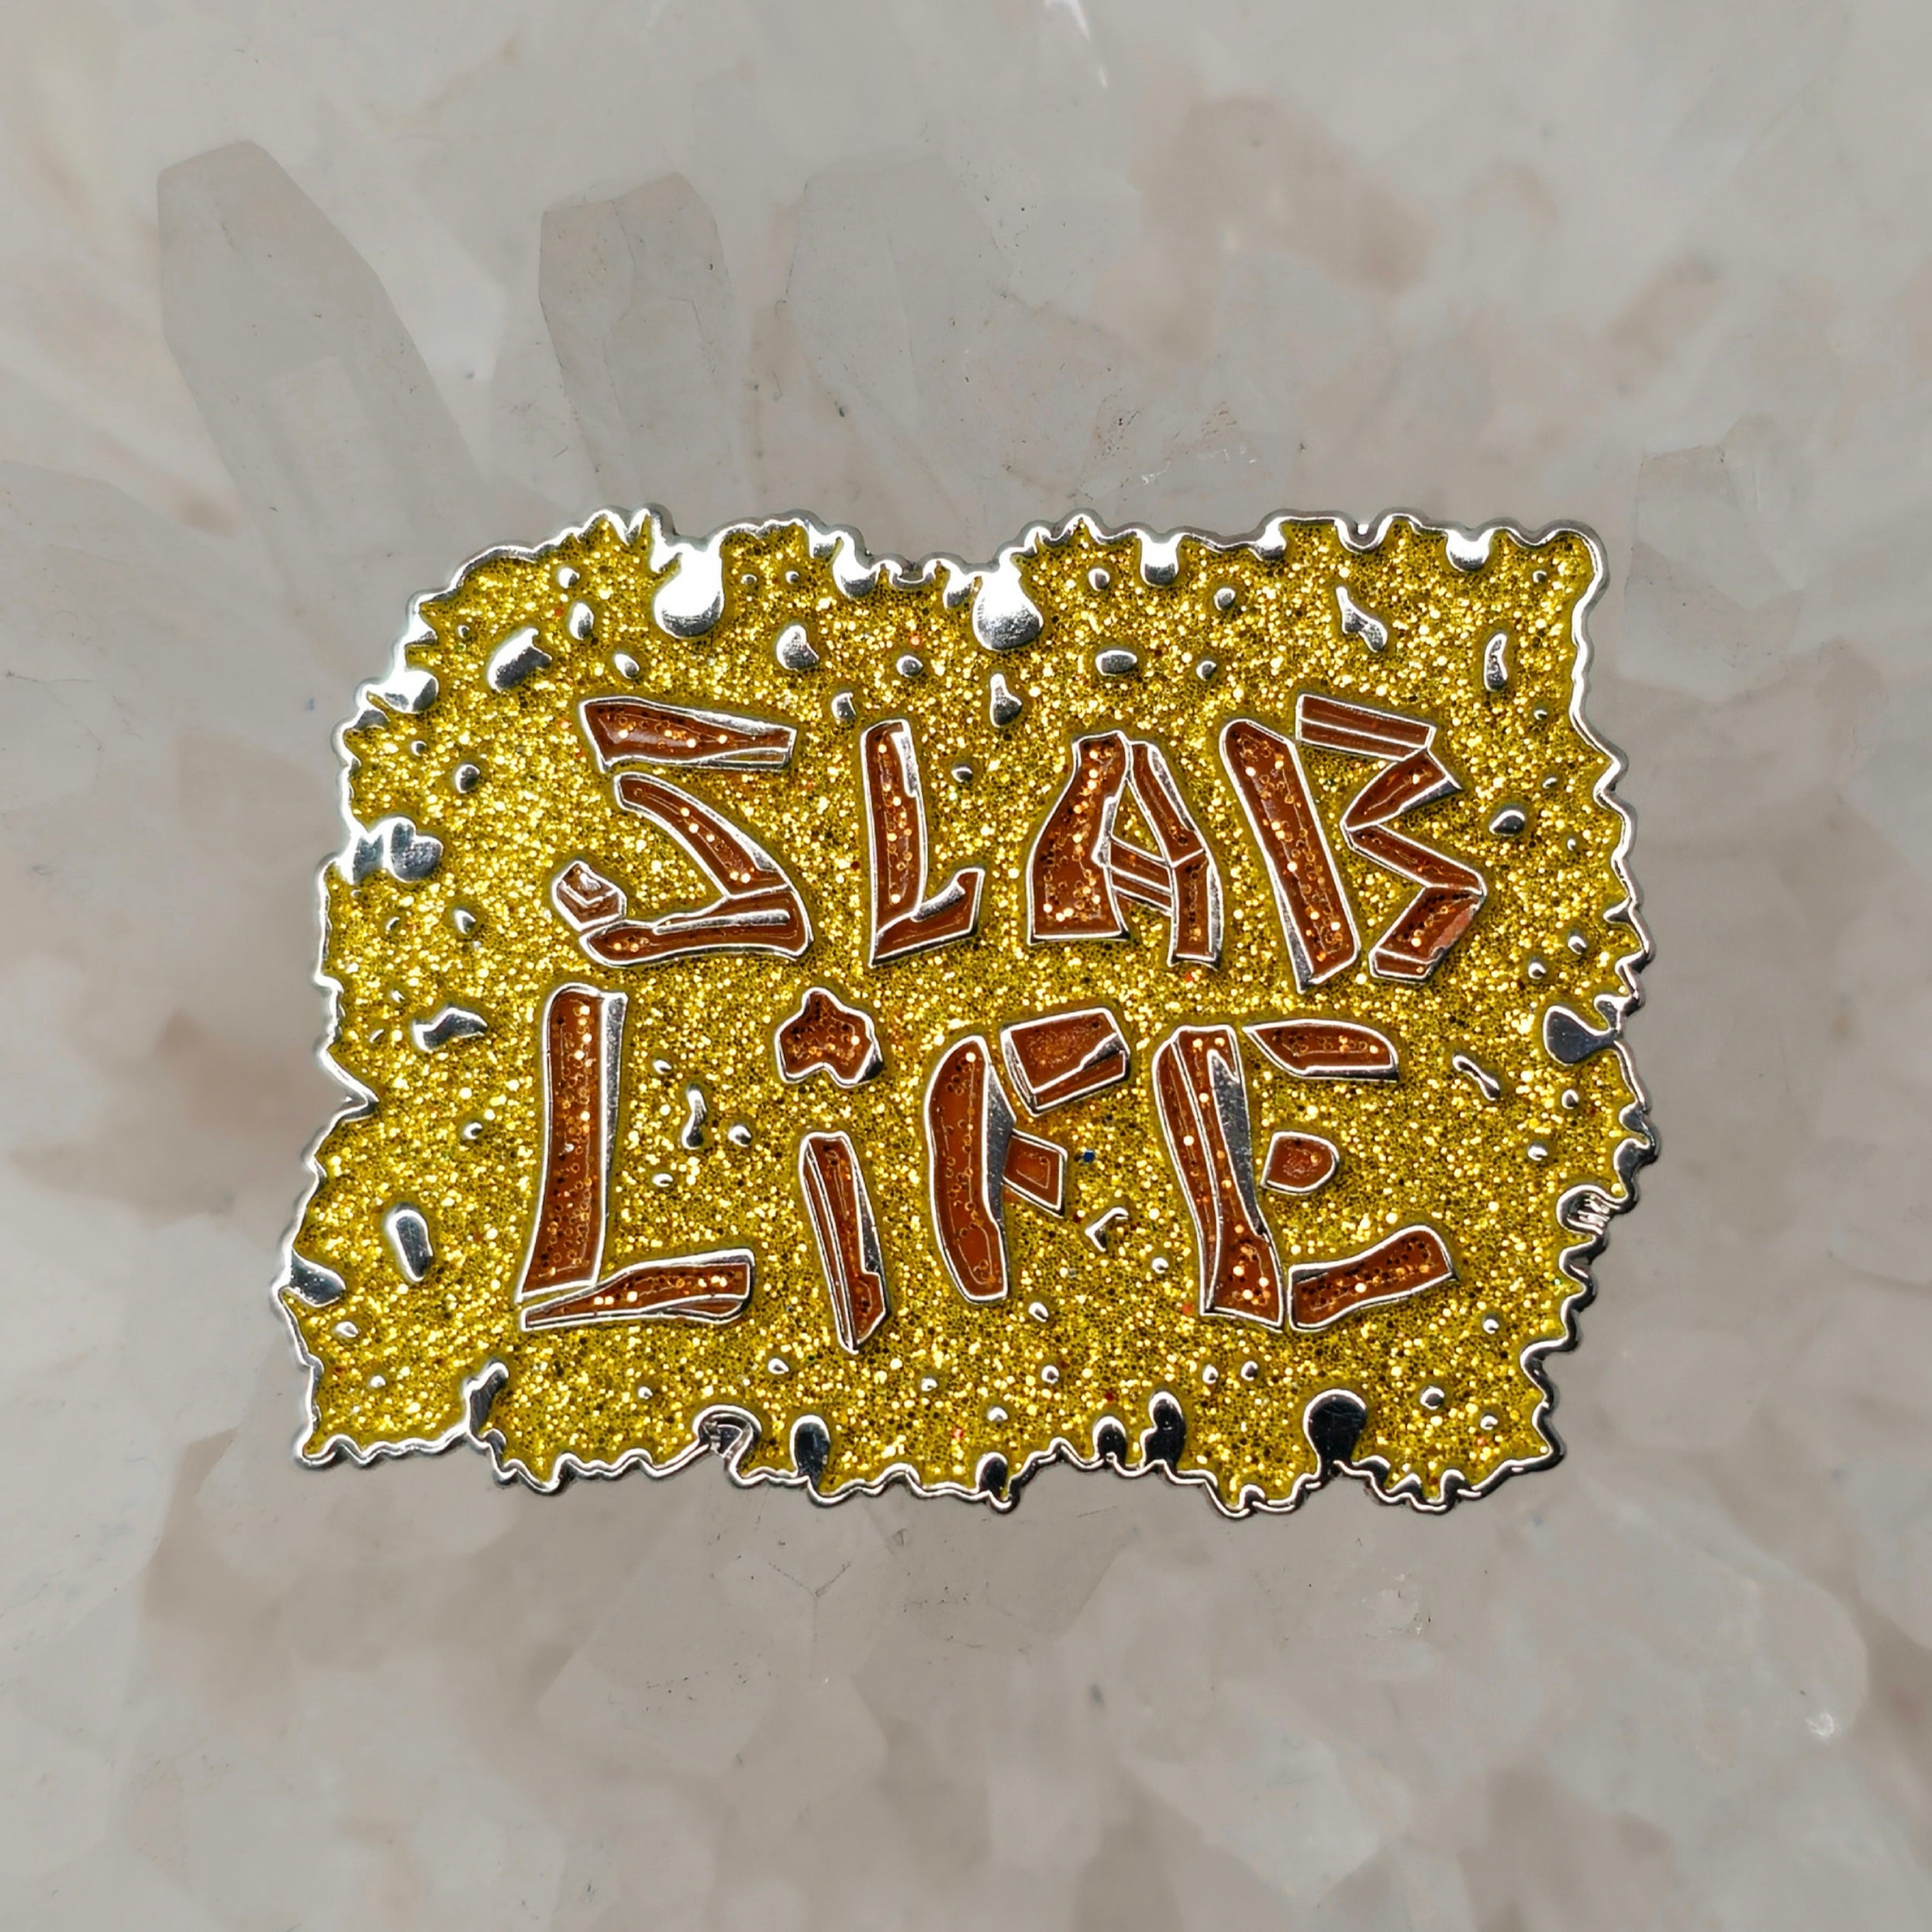 Slab Life Dab Crew 420 Weed Glitter Enamel Hat Pin